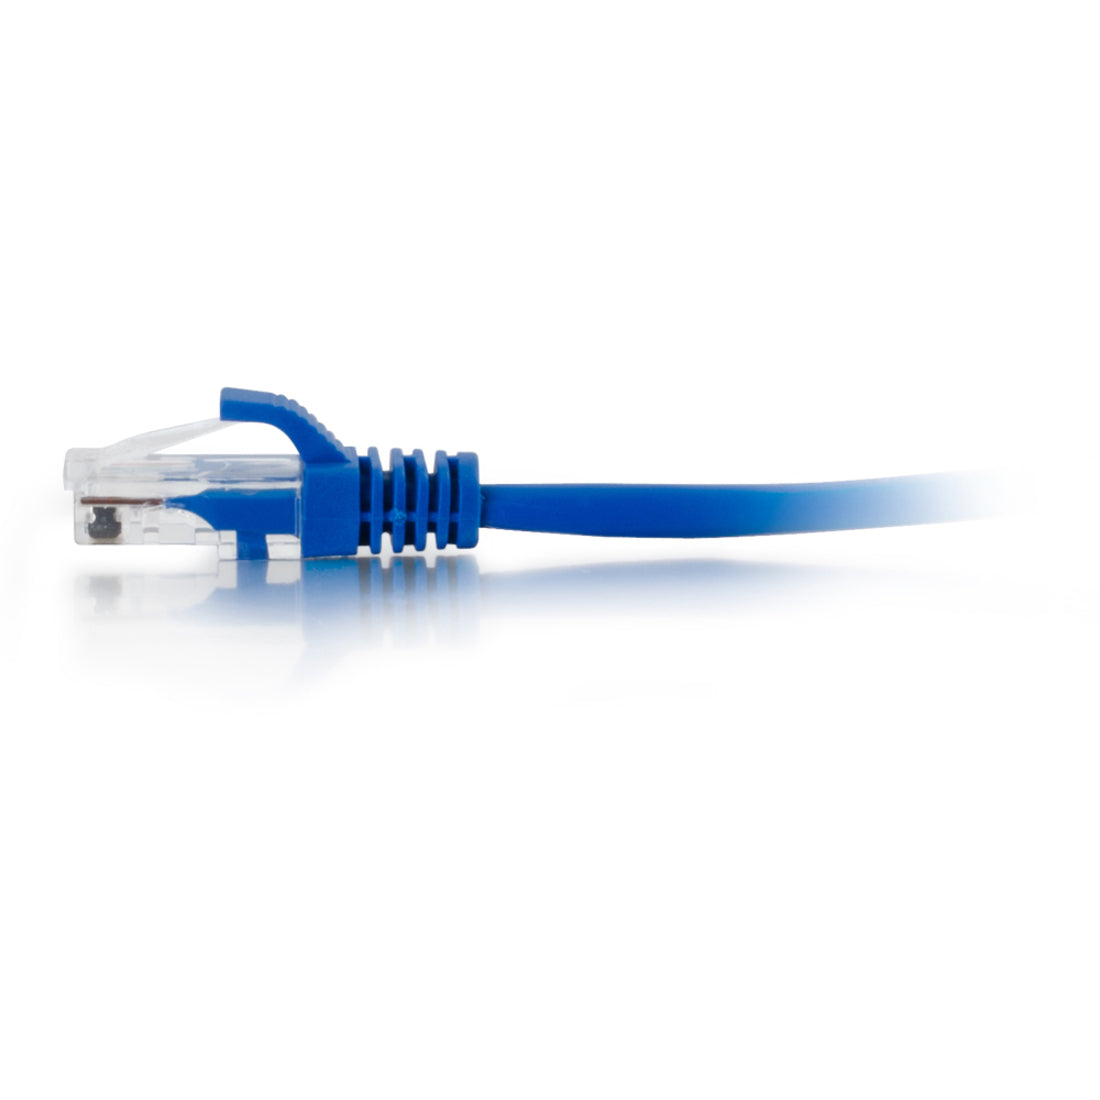 C2G 15193 7ft Cat5e Unshielded Ethernet Cable - 青 ネットワーク パッチ ケーブル C2G = C2G Cat5e = Cat5e Ethernet = イーサネット Cable = ケーブル Blue = 青 Network = ネットワーク Patch = パッチ